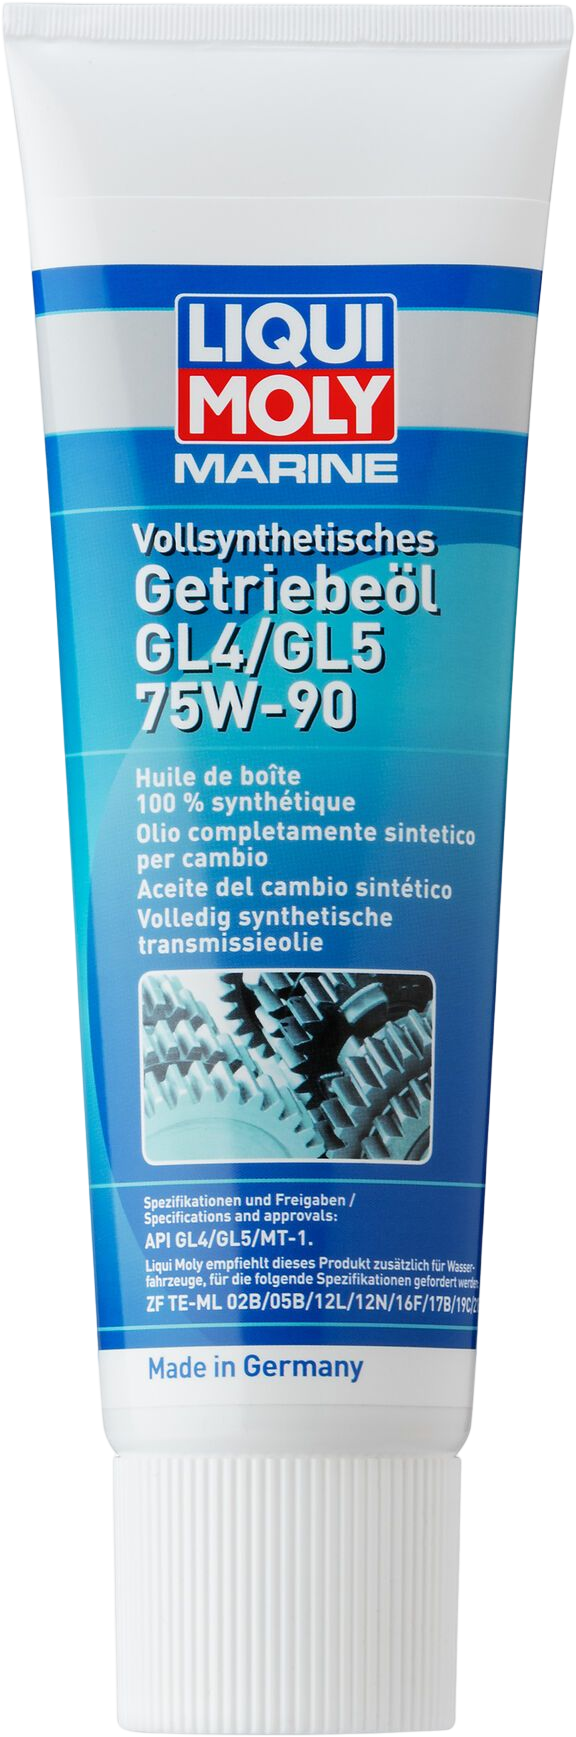 Liqui Moly Marine Volledig synthetische transmissieolie GL4/GL5 75W-90, 250 ml